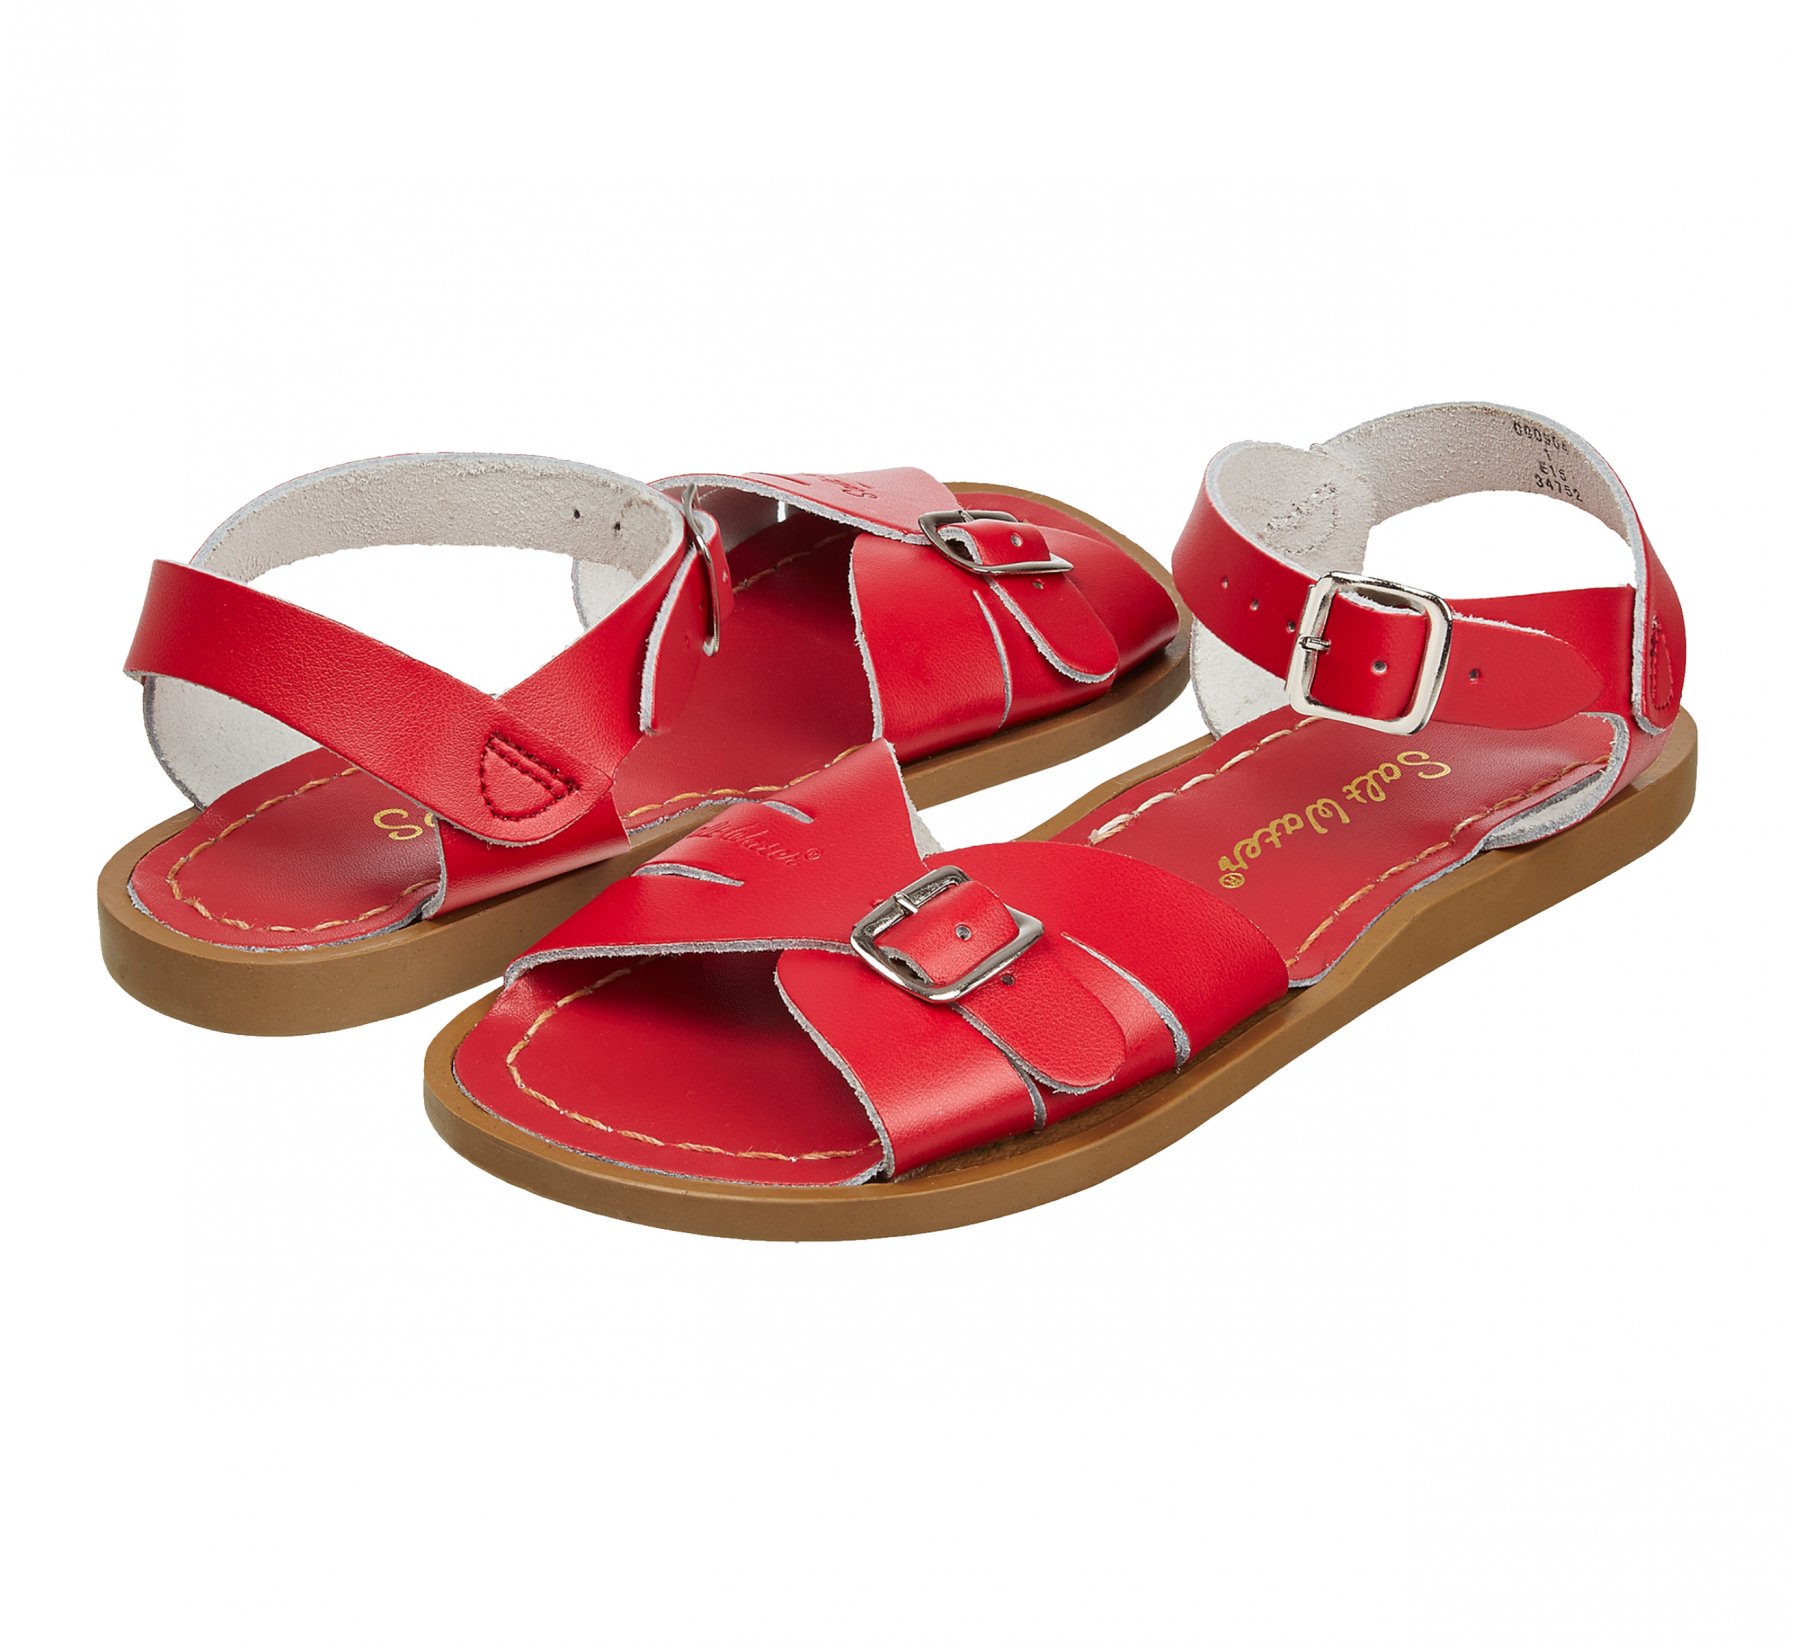 Classic Red Kids Sandals - Salt Water Sandals